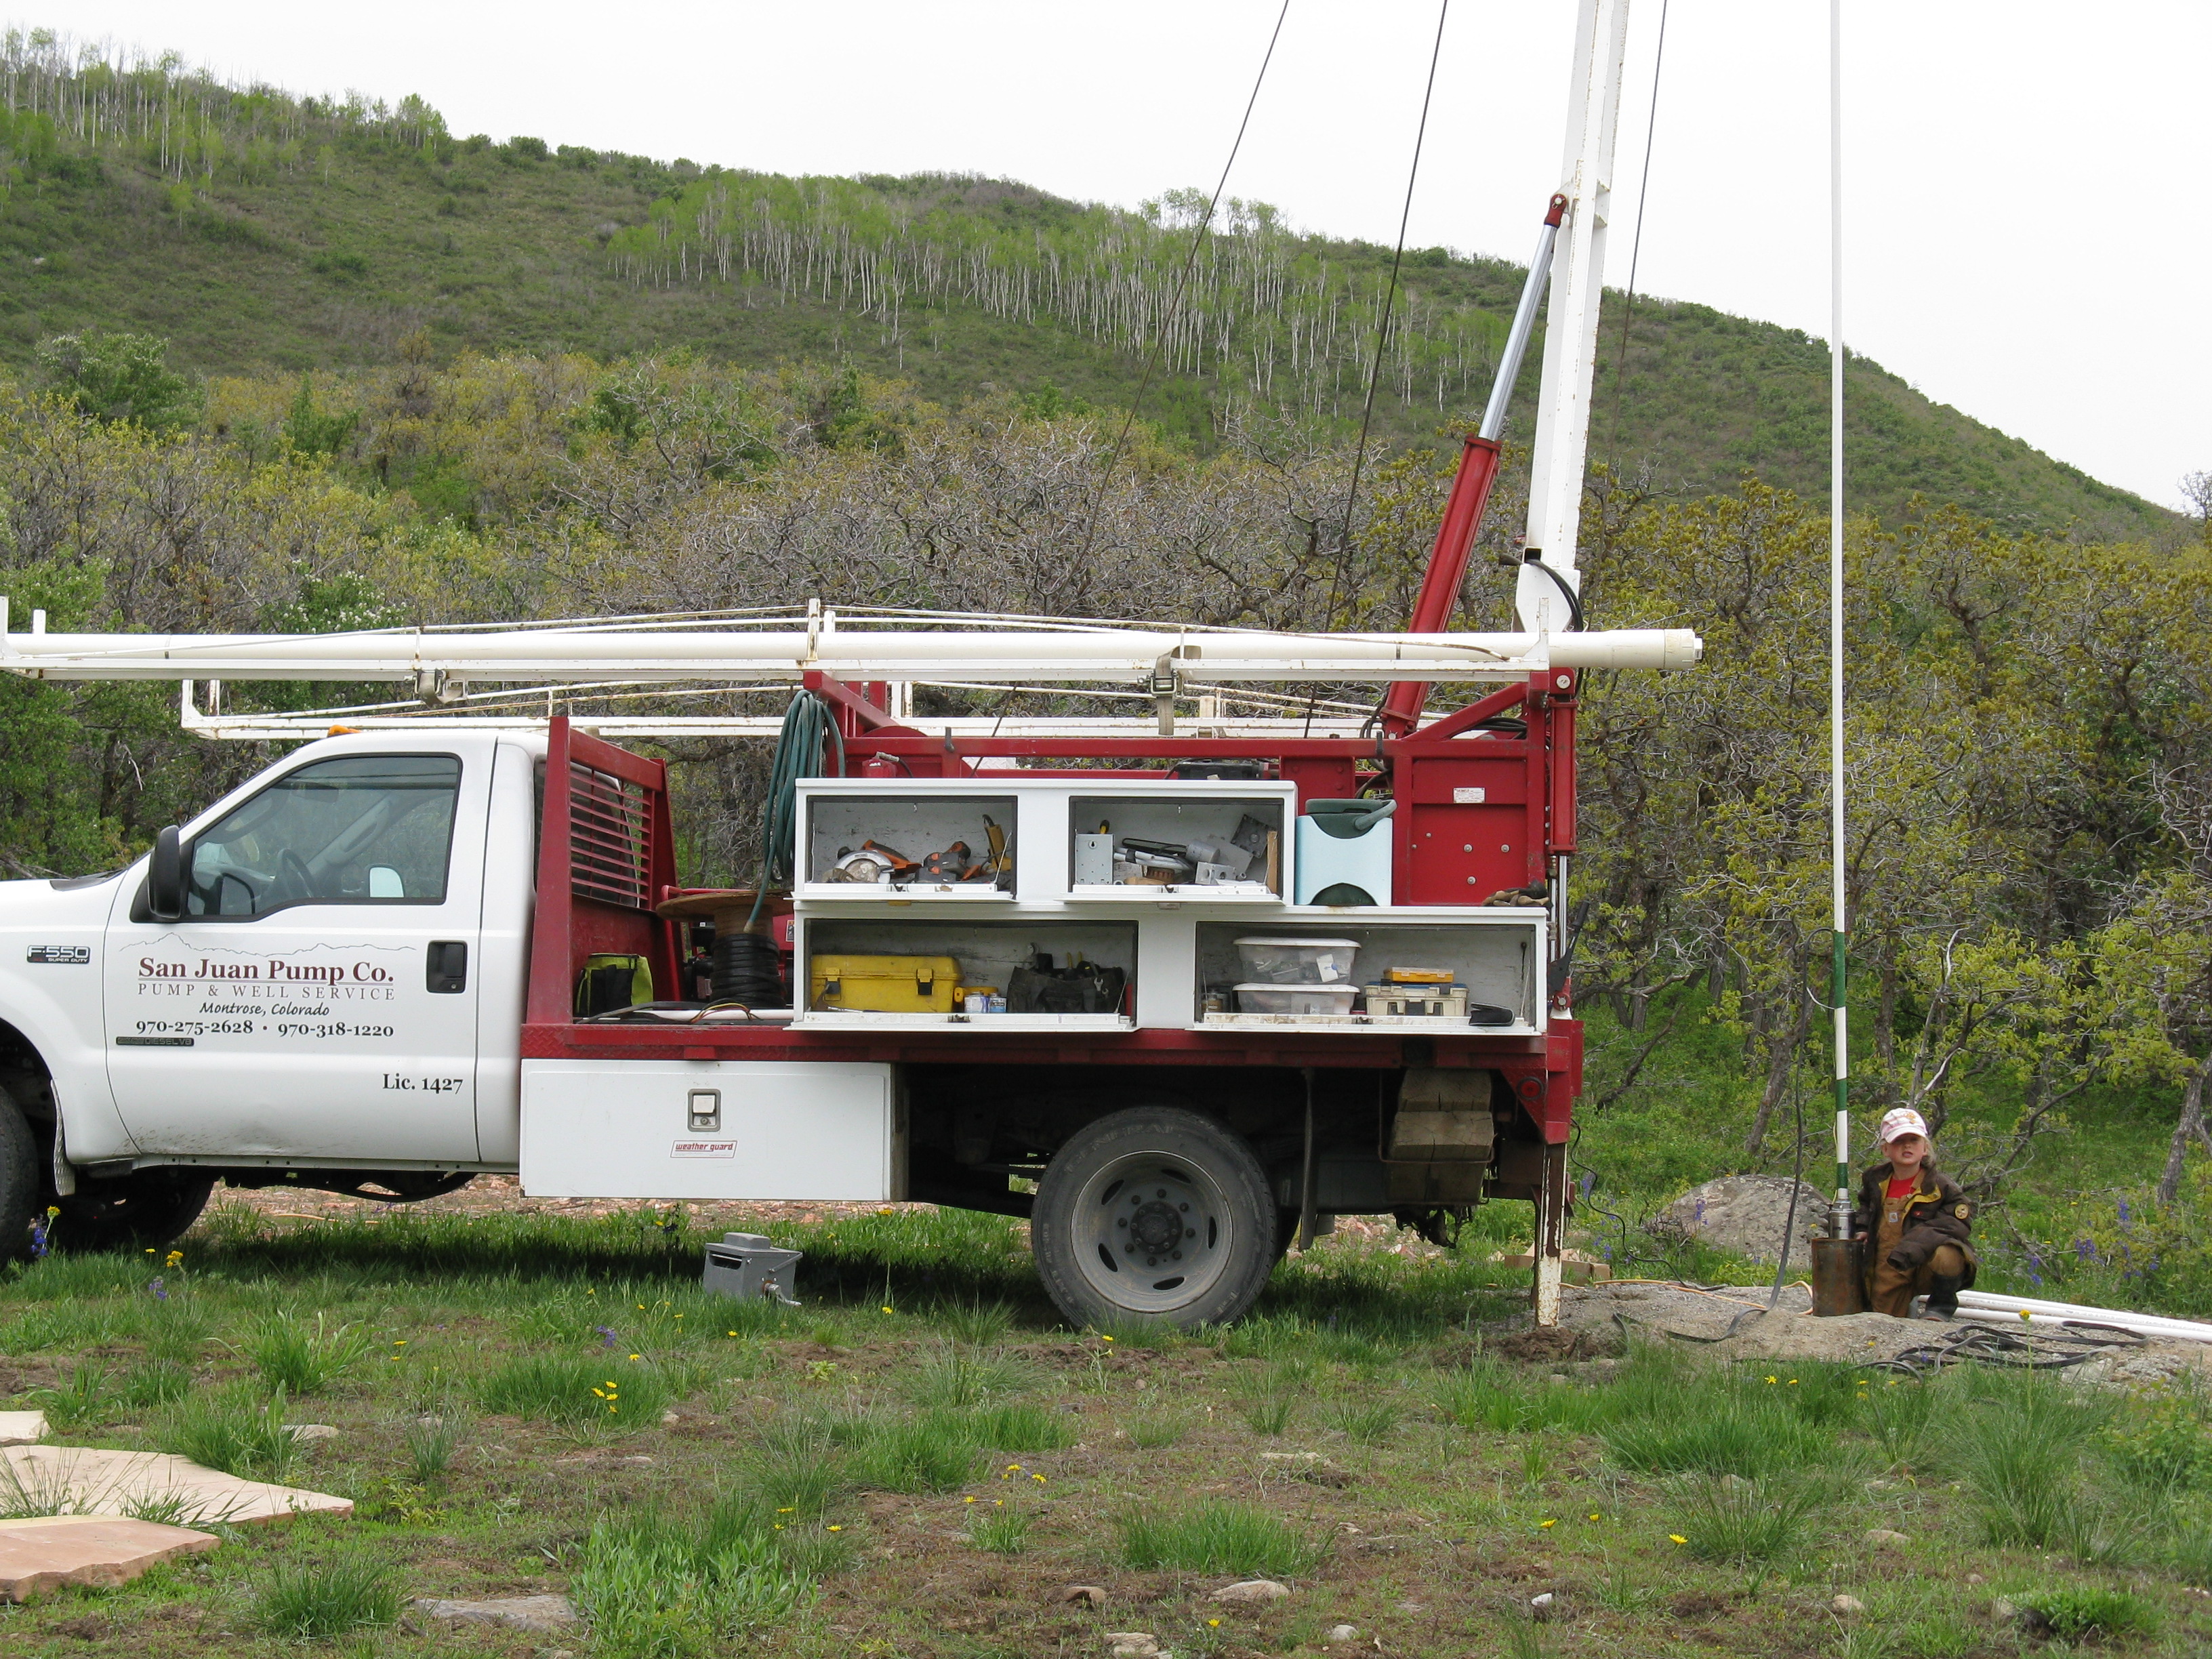 San Juan Pump Co. drilling well